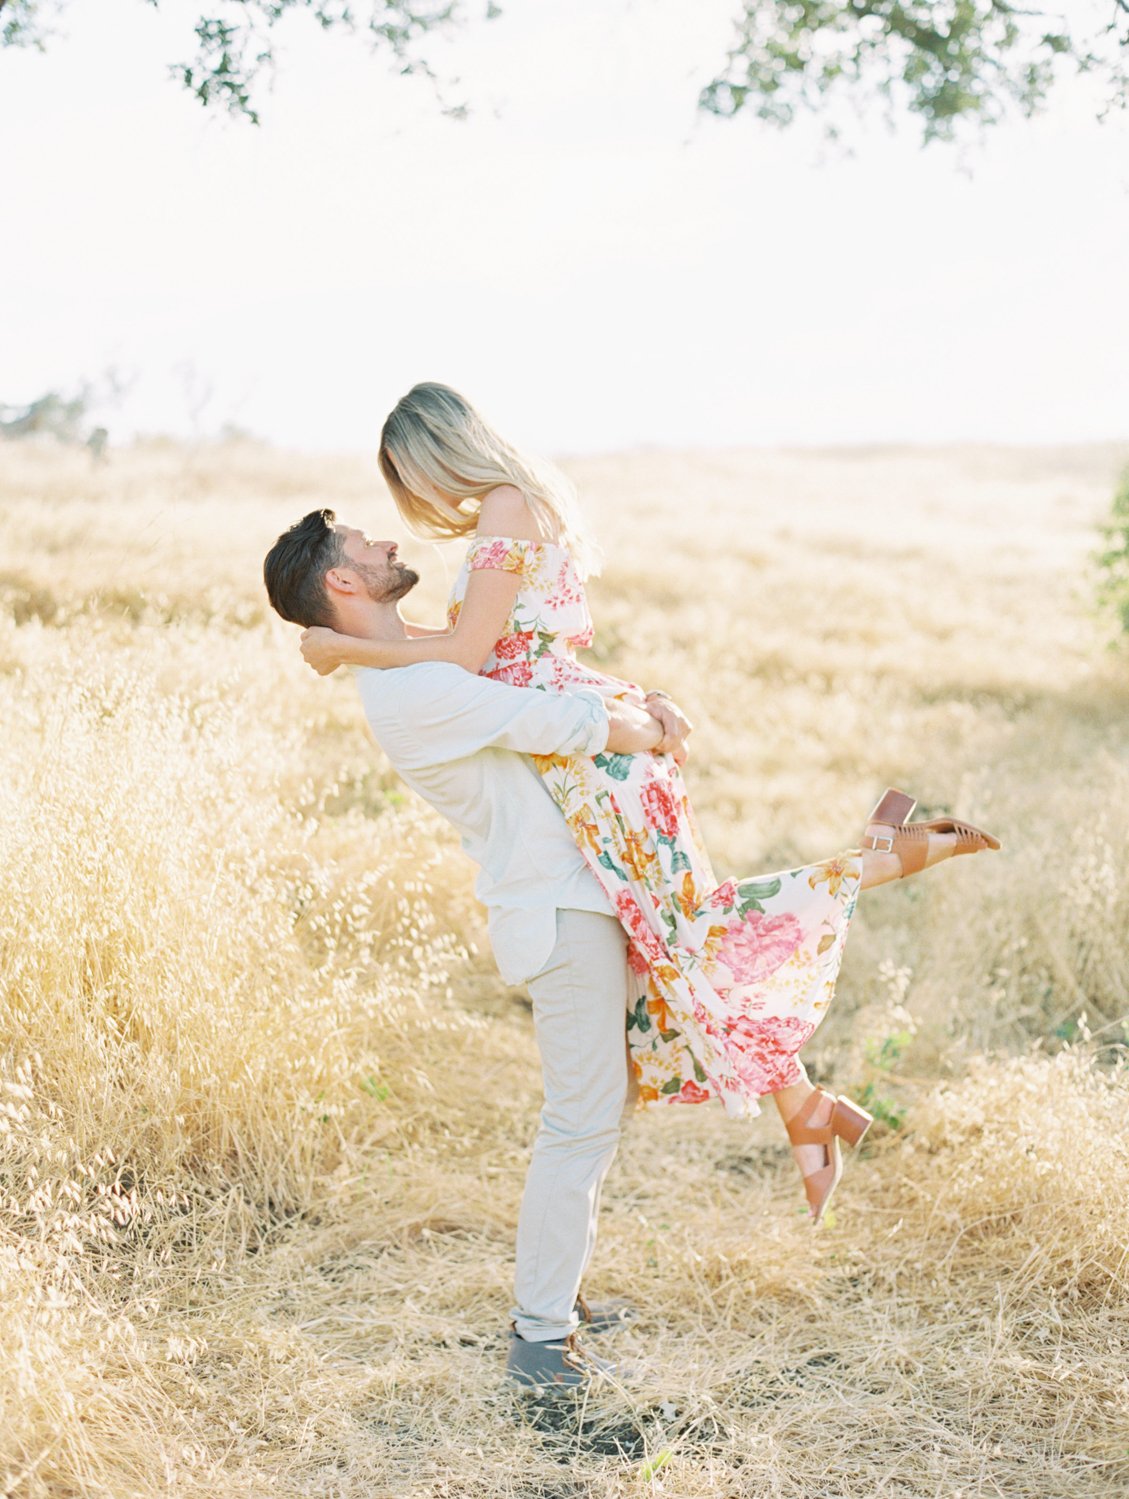 wisteria-photography.com | Wisteria Photography | Malibu Canyon | Weddings Engagement | Southern California Photographer-10.jpg